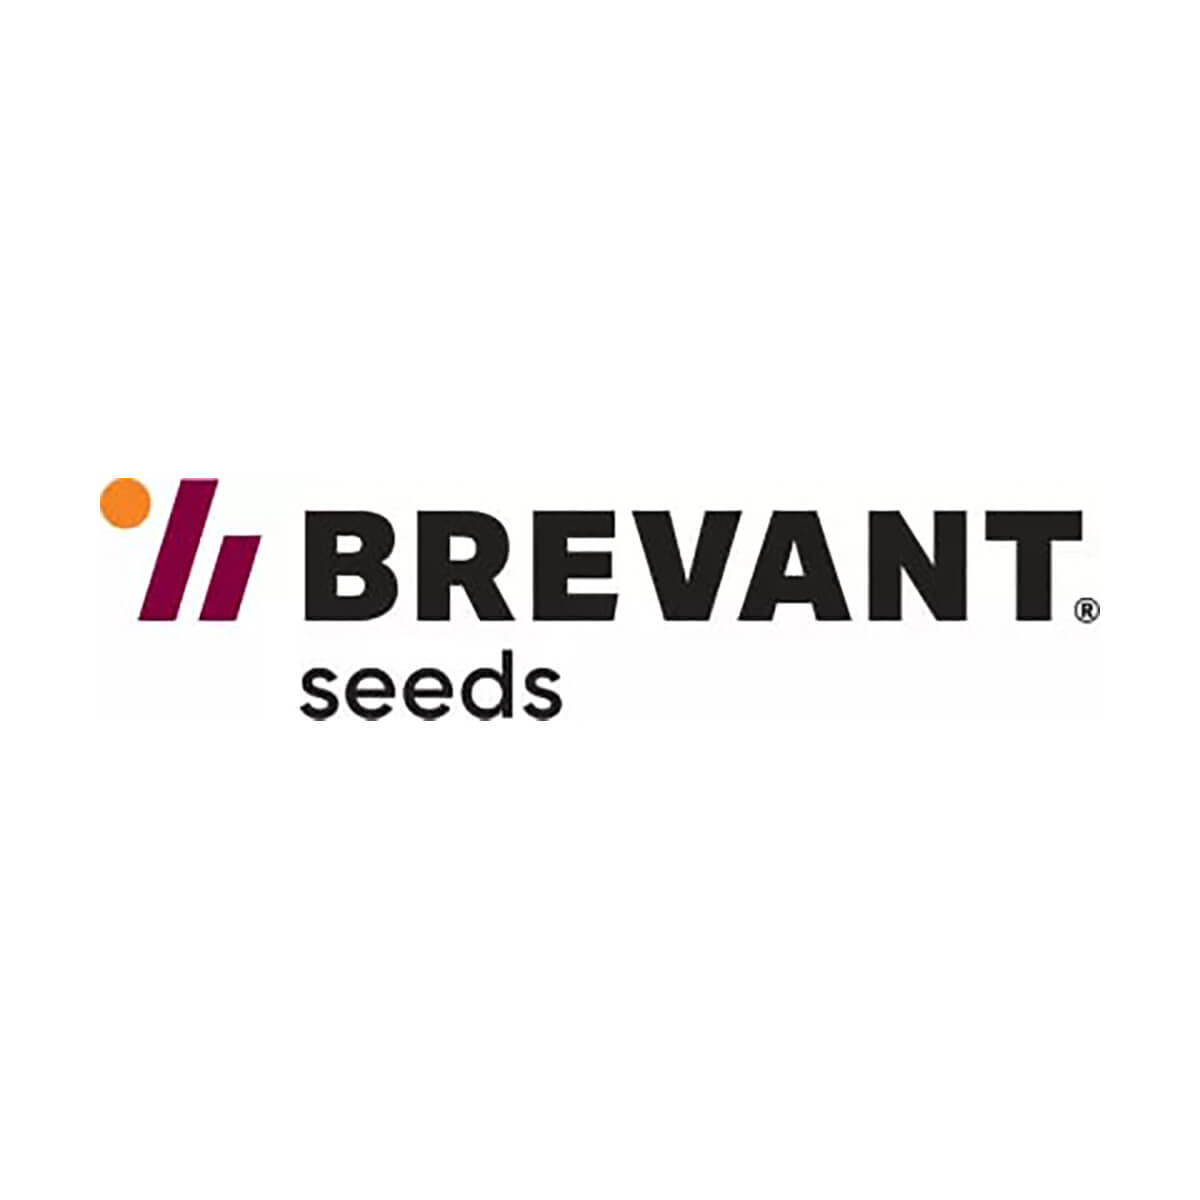 Brevant® seeds B3010M